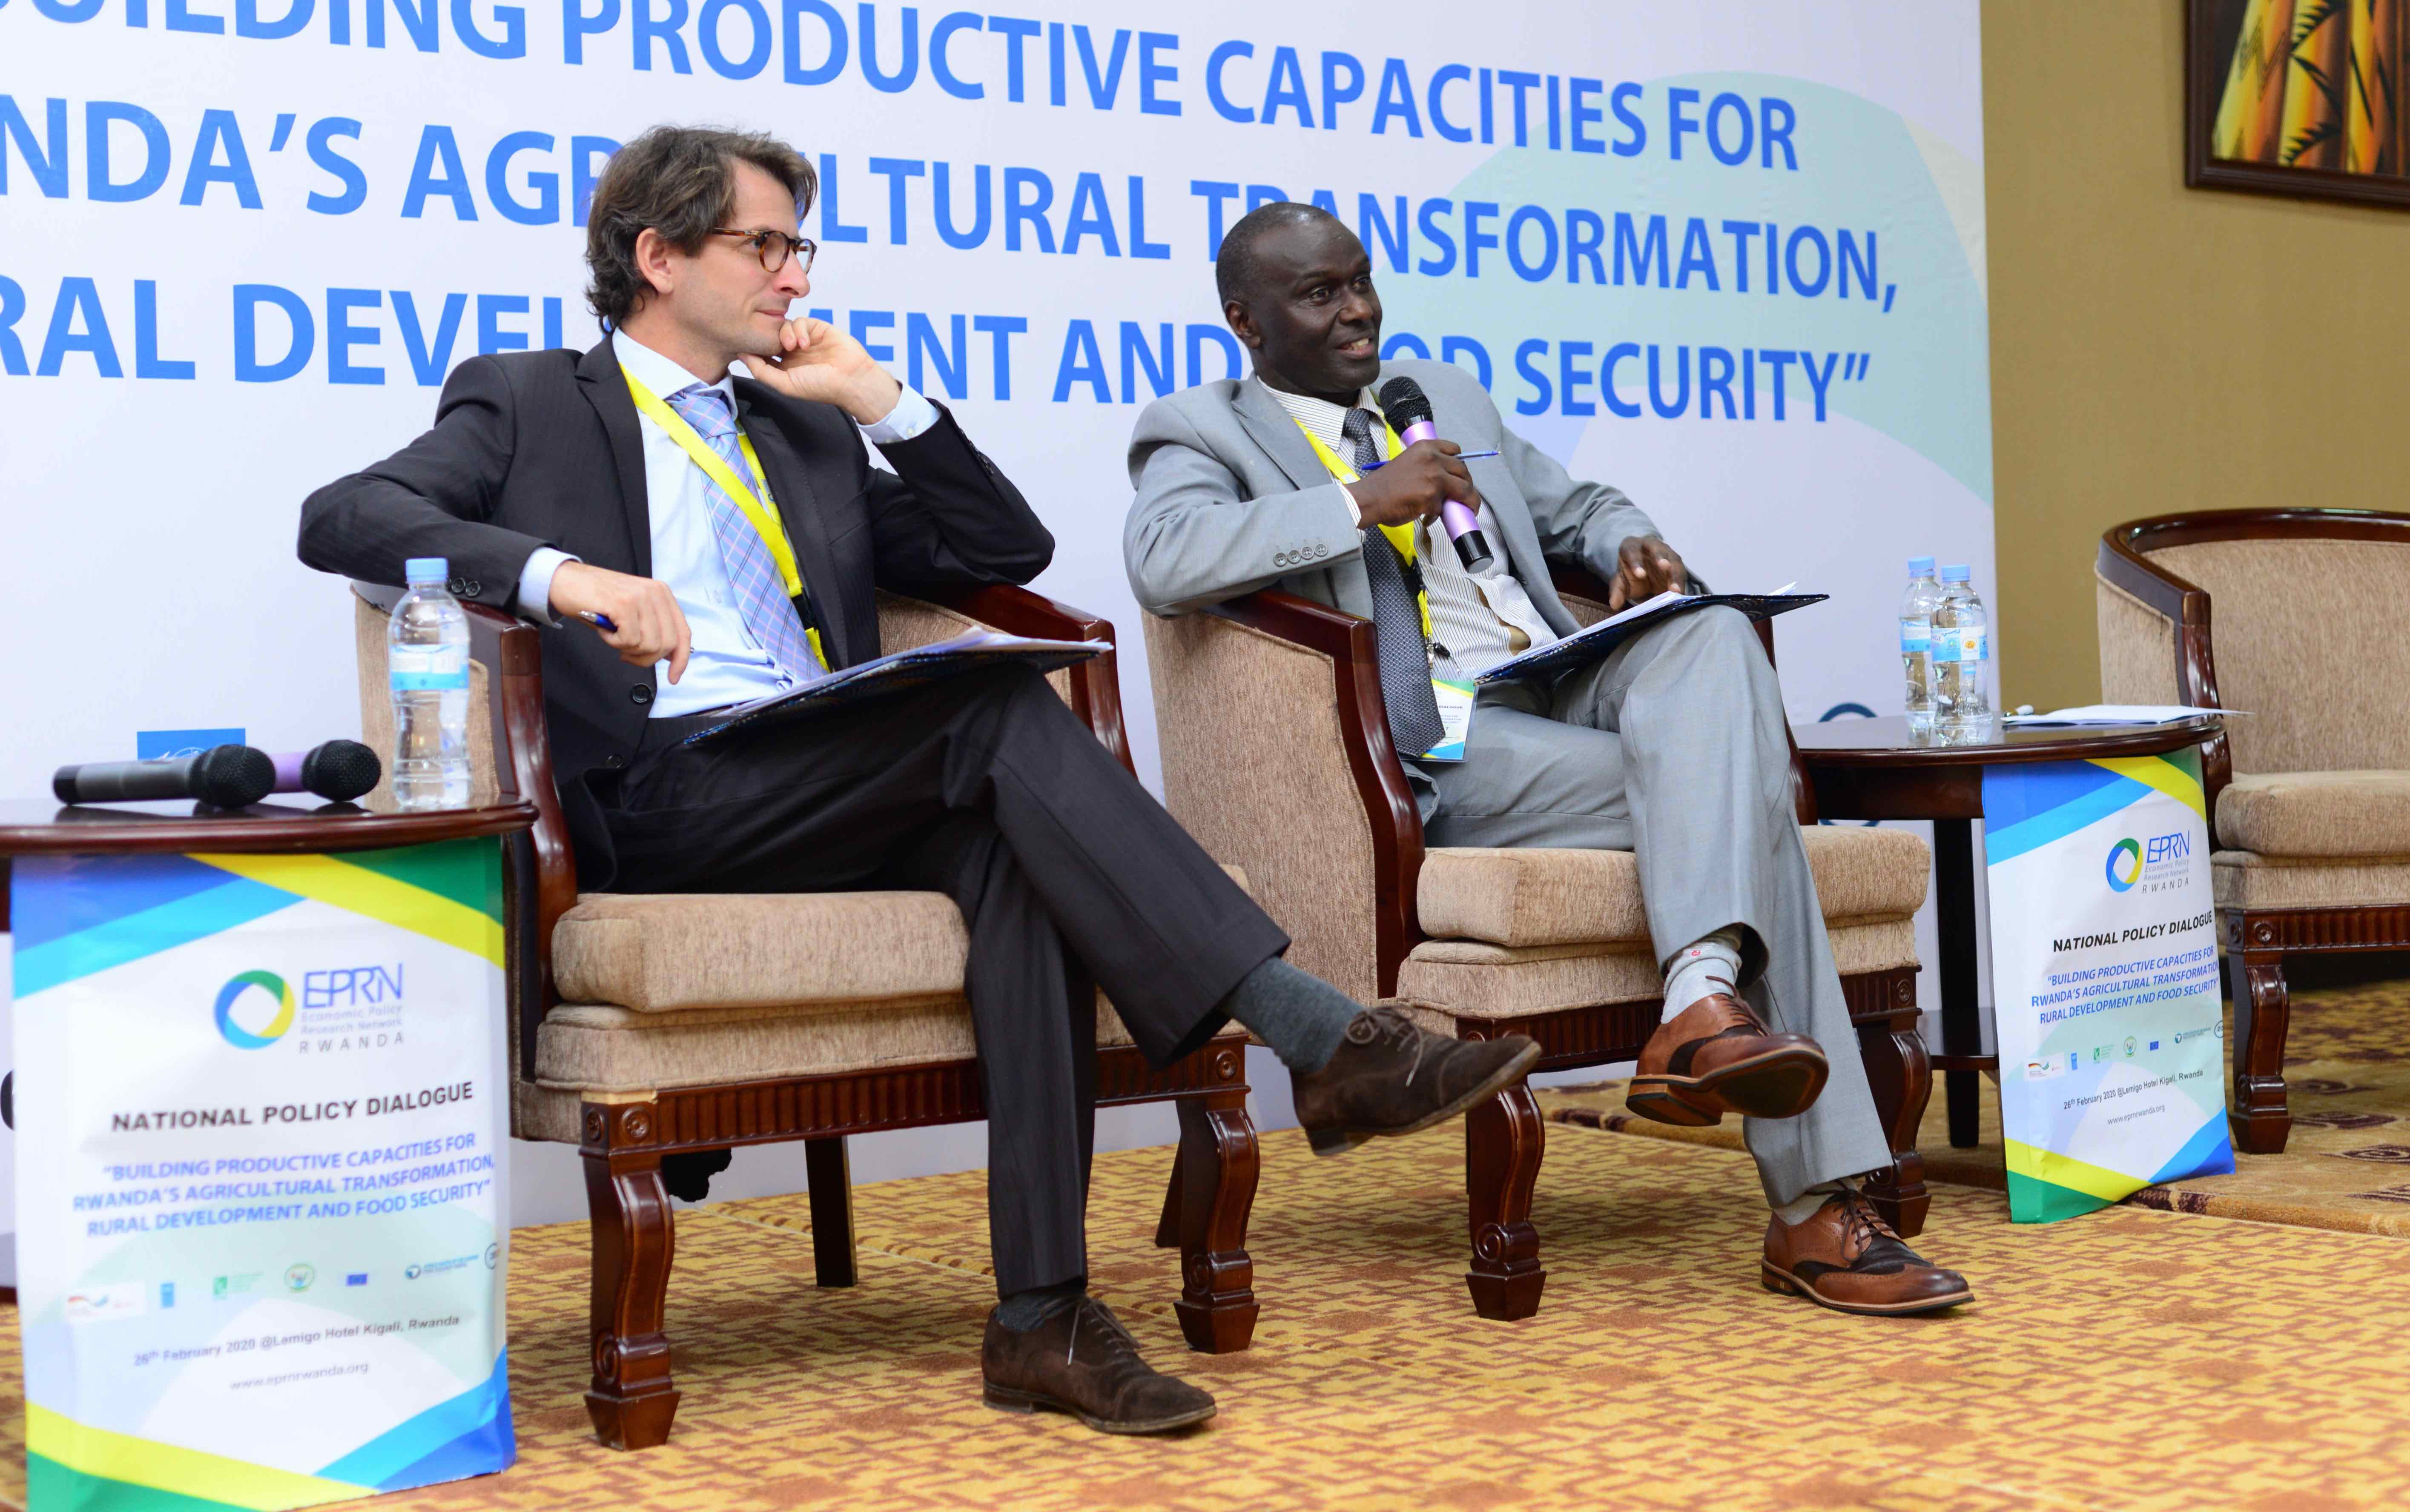 National policy dialogue: Charting Rwanda's agricultural transformation